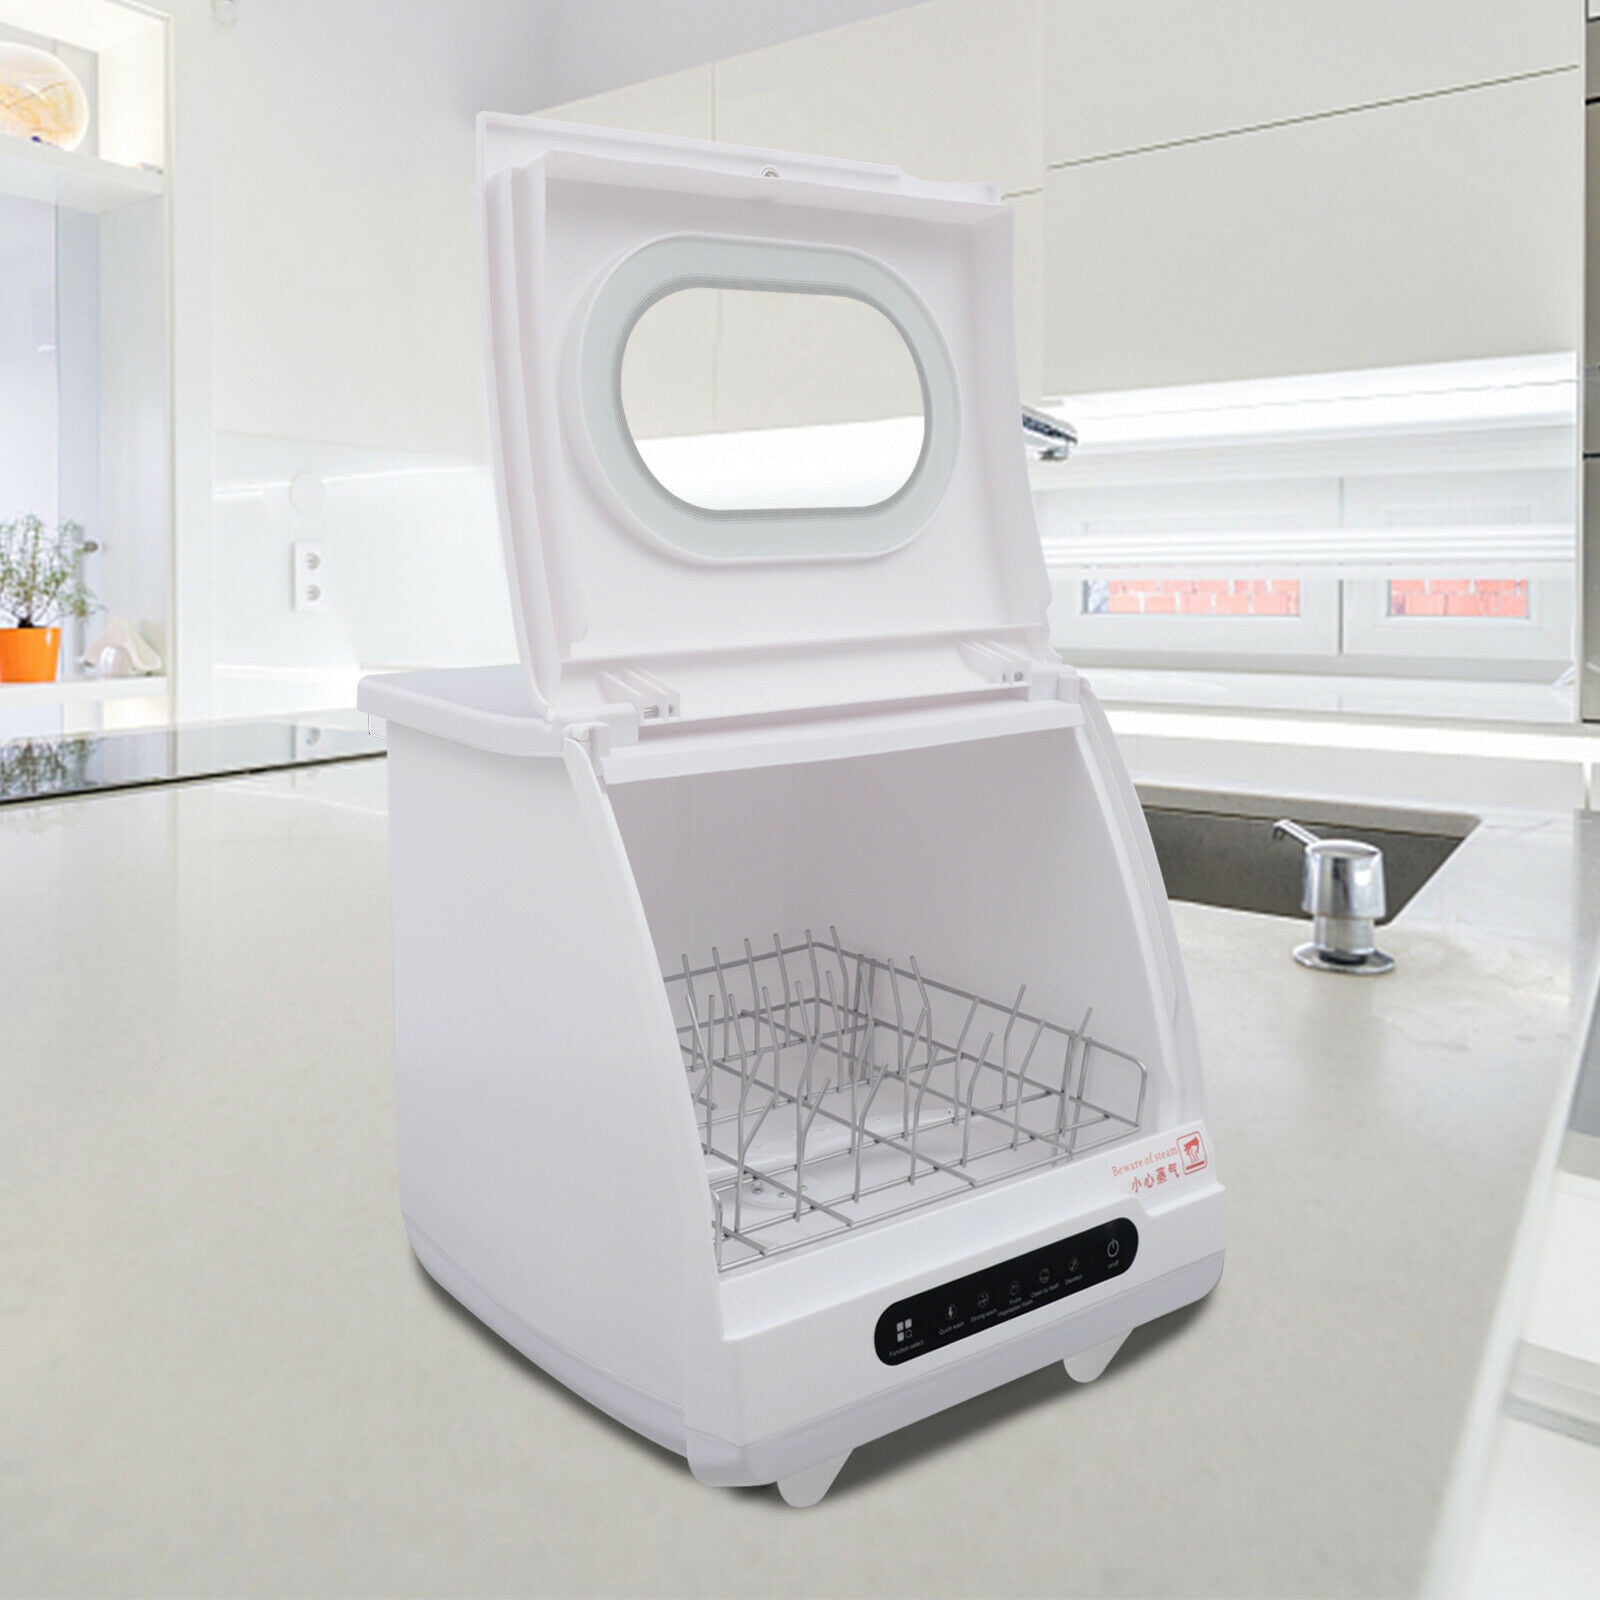 Anqidi Portable Countertop Dishwasher, 1200W White ABS+PP Dishwasher, 5 Washing Programs, Full Panel Control 15.7x15.7x17.72